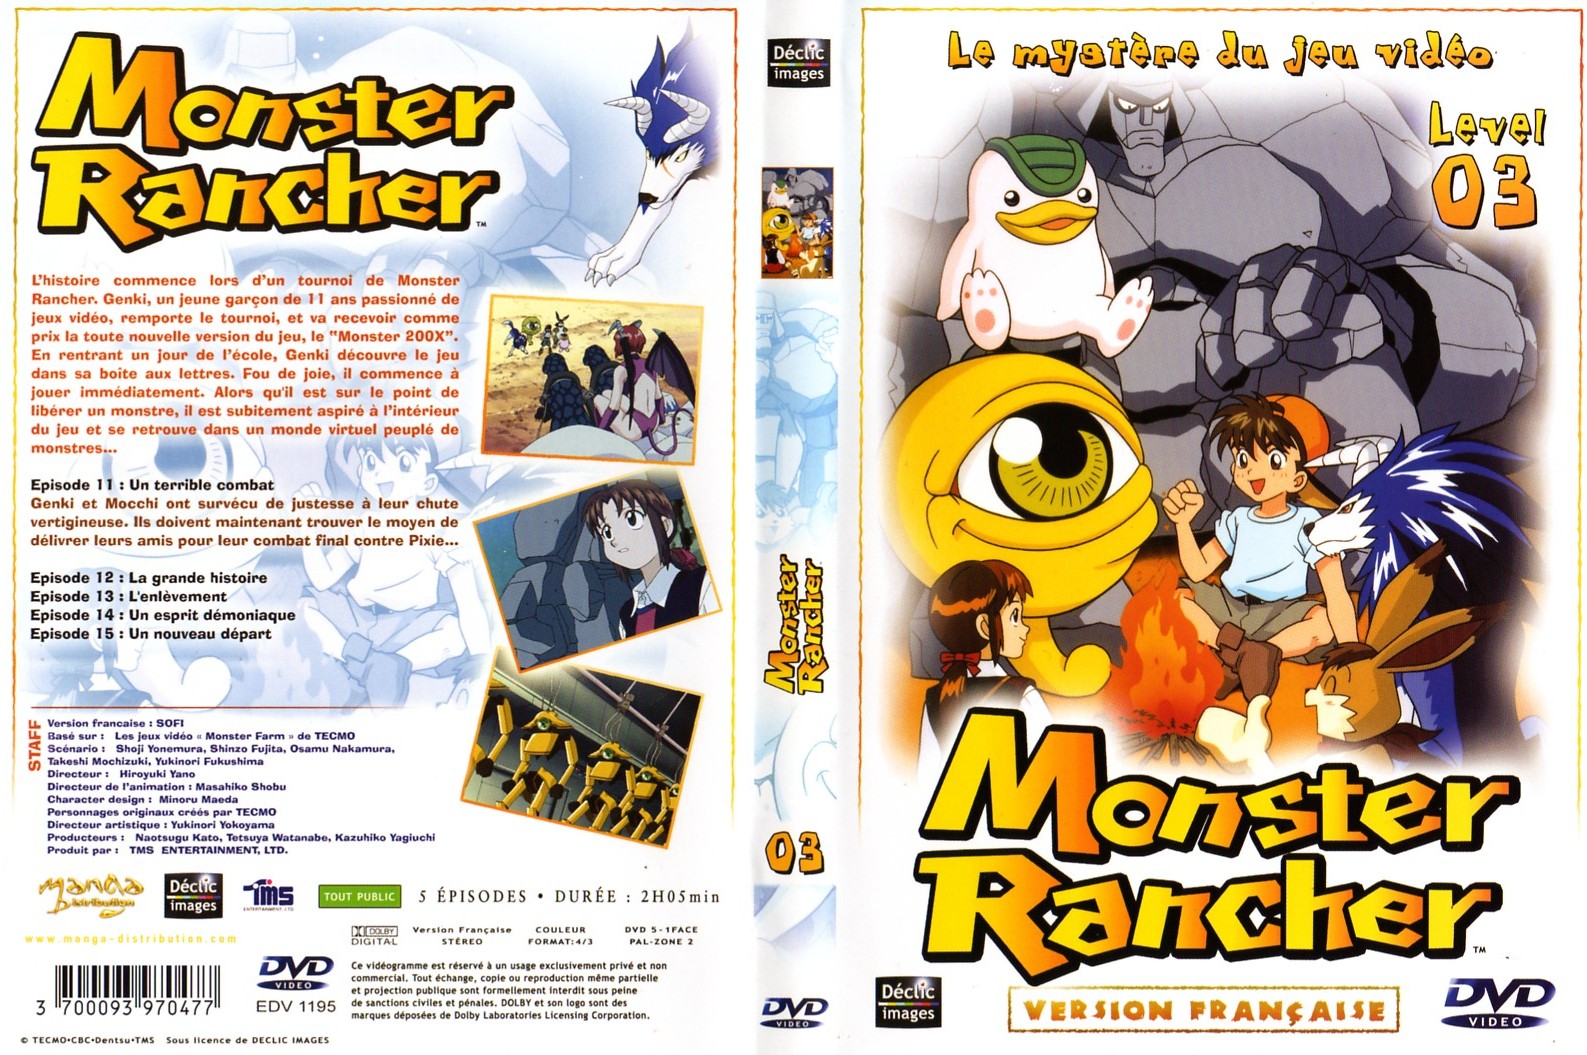 Jaquette DVD Monster rancher vol 3